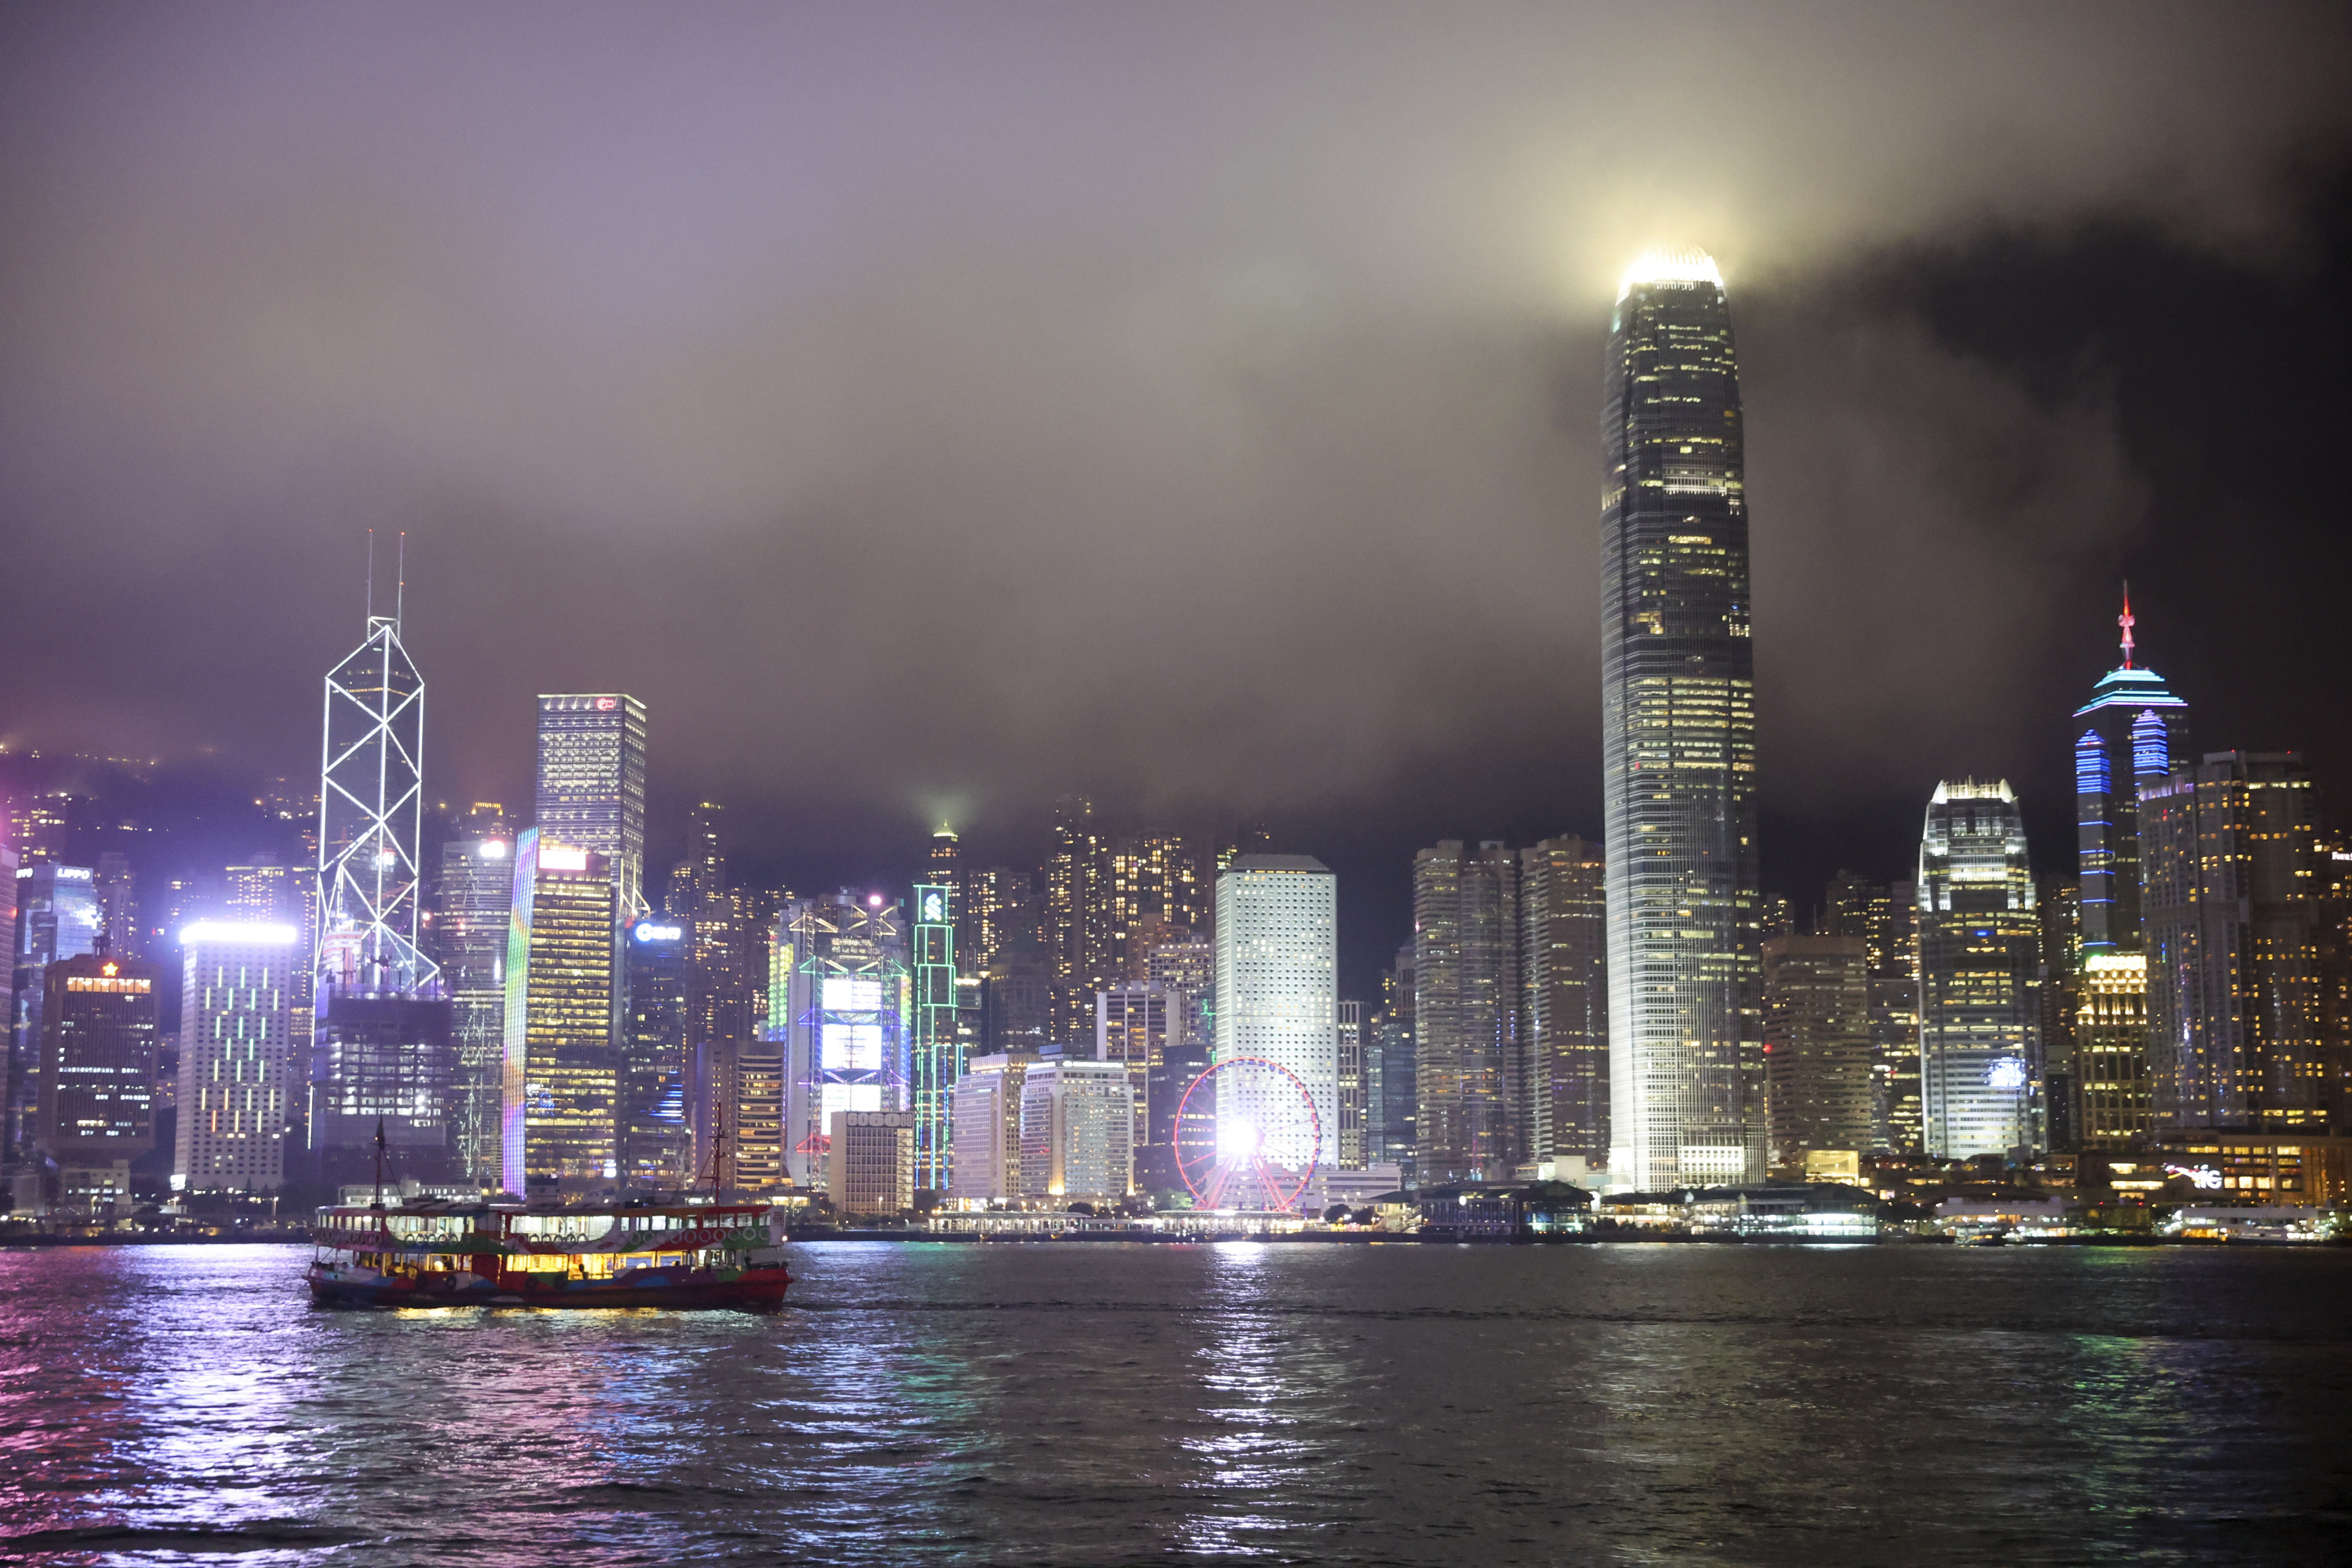 Henderson Land says its new landmark development will add to Hong Kong’s dramatic architectural skyline. Photo: Edmond So / SCMP